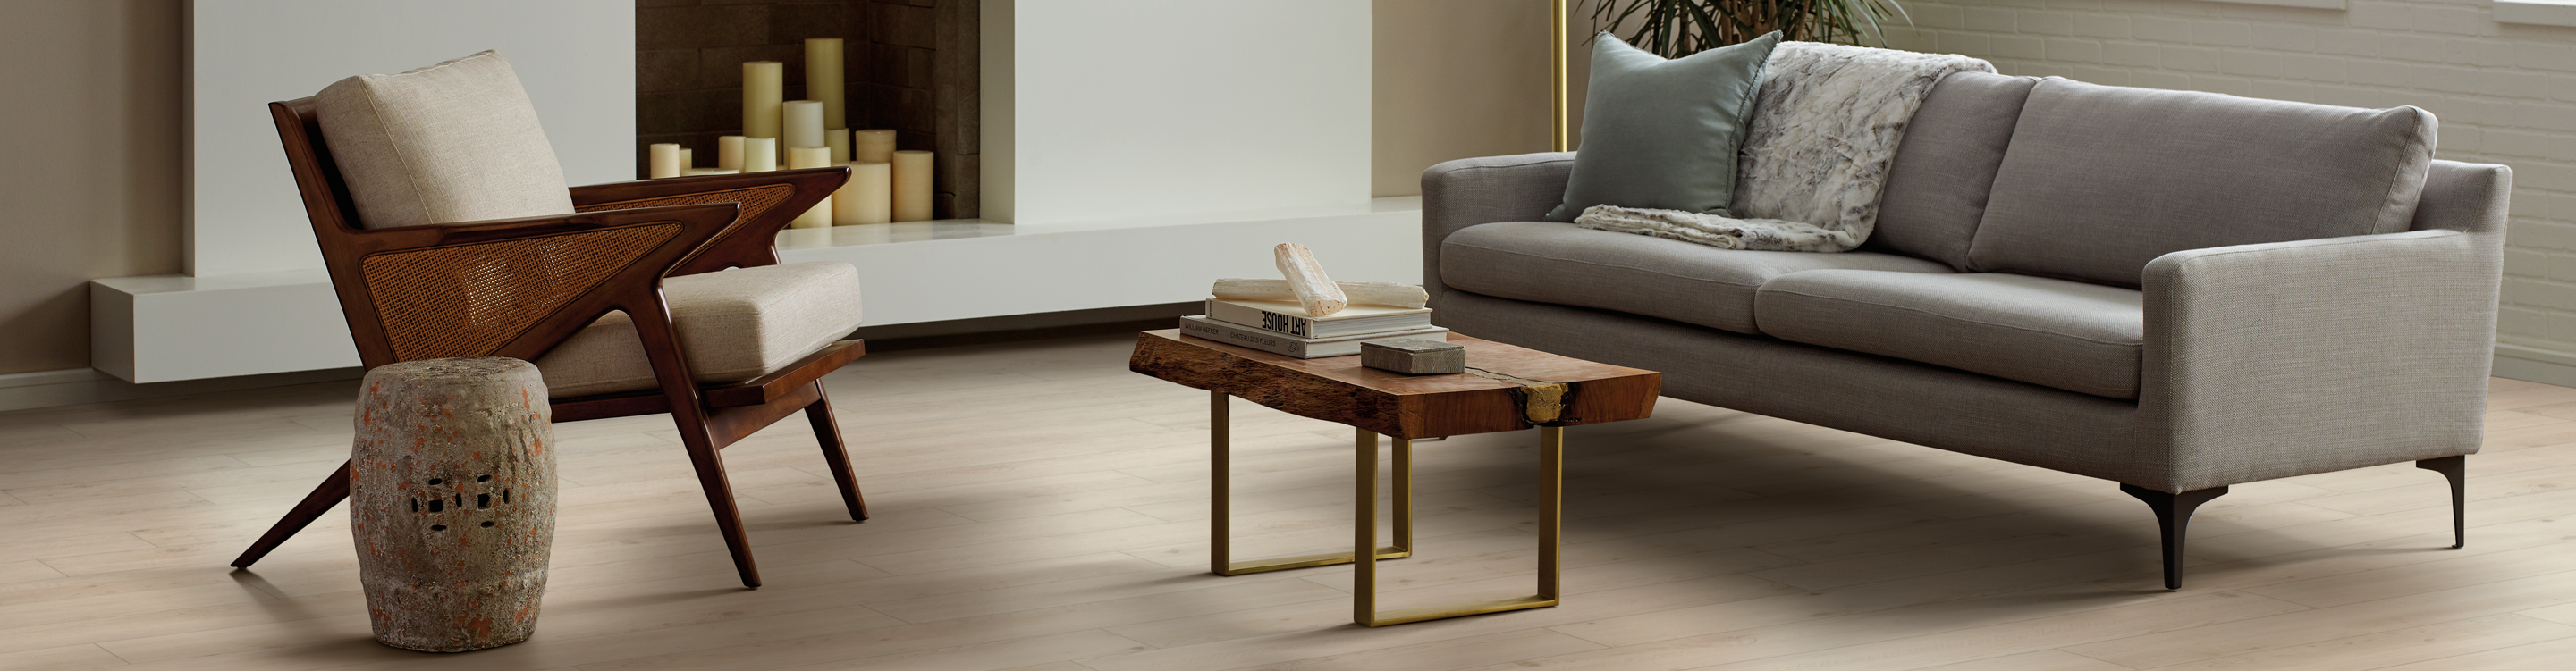 luxury vinyl plank in living room with grey sofa